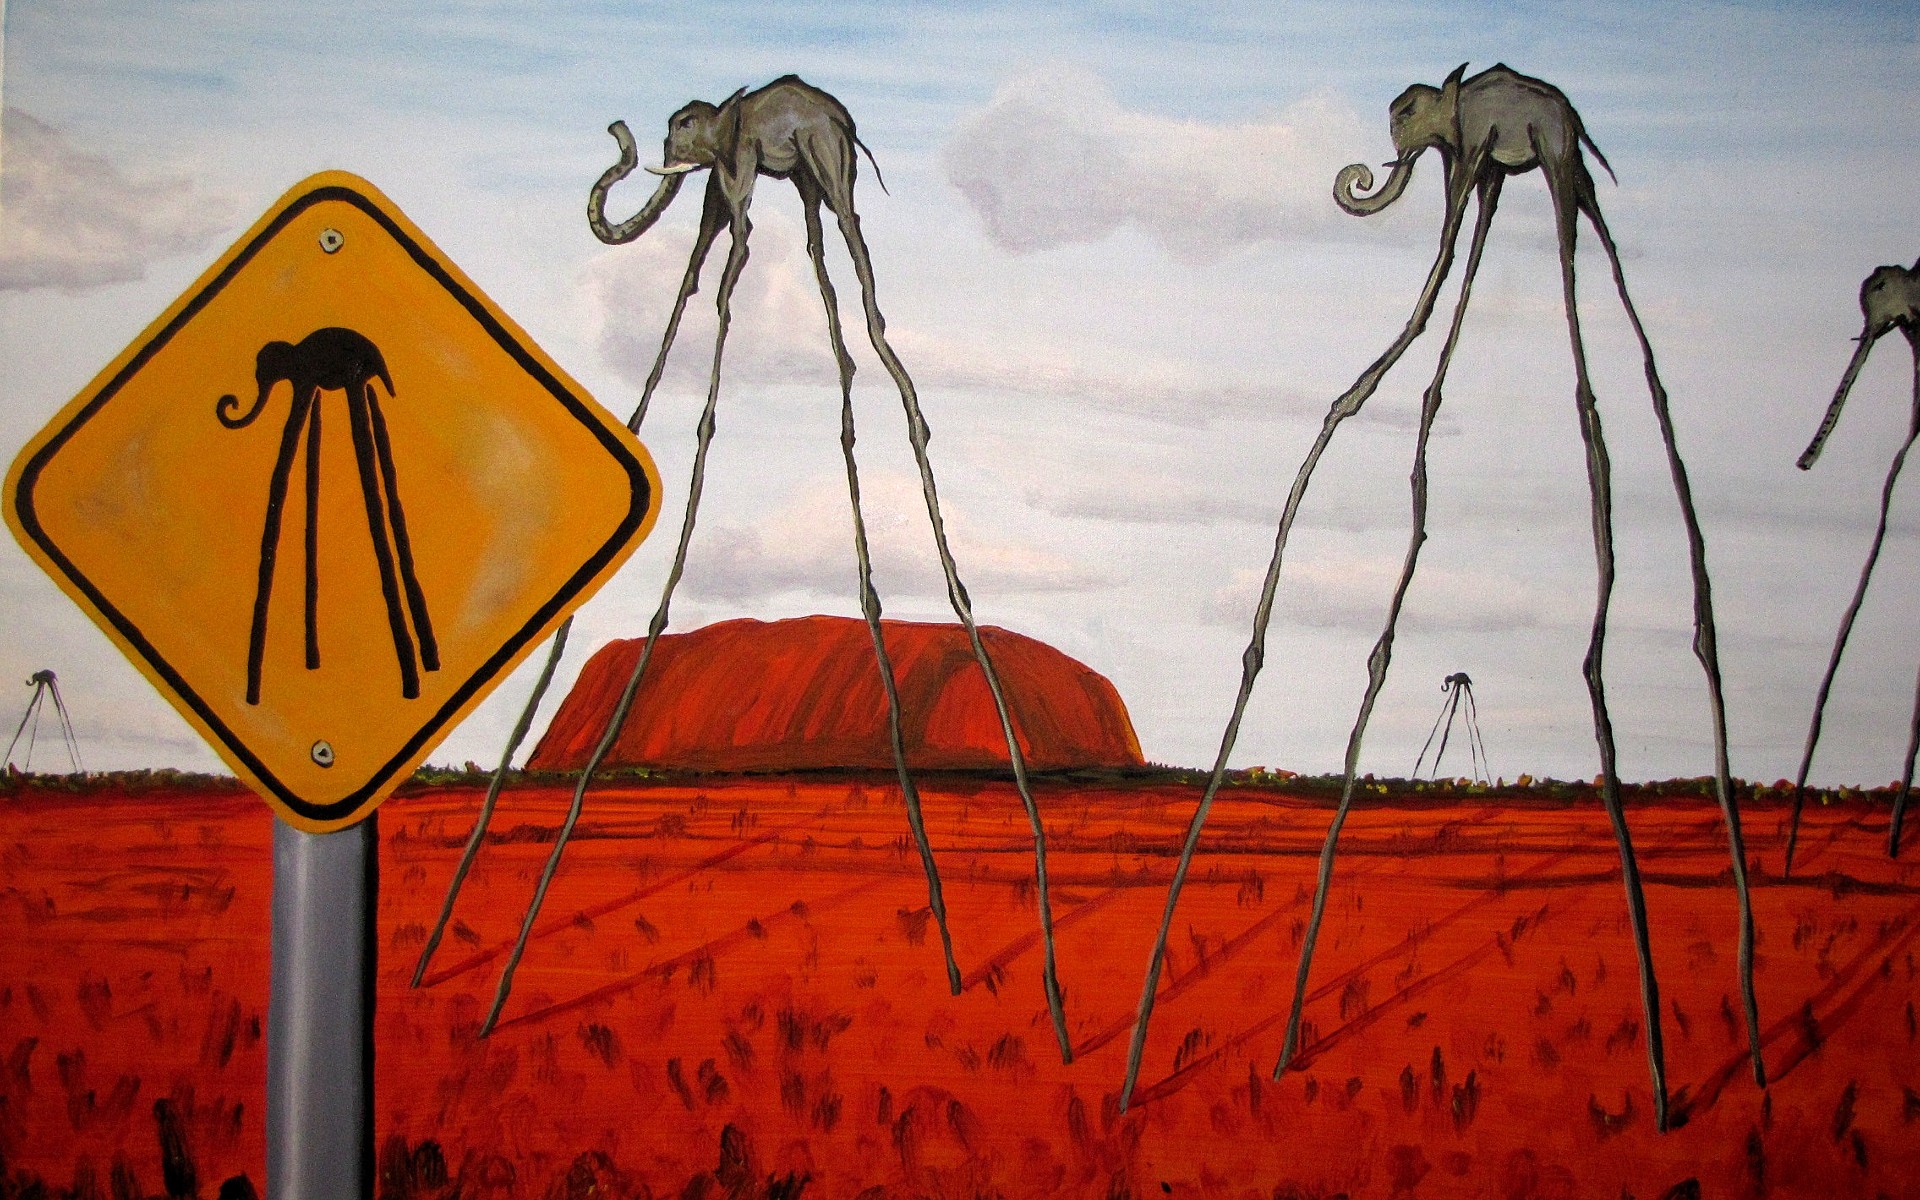 Legs Salvador Dalí Fantasy Art Surreal Clouds Elephant Signs Hills ...